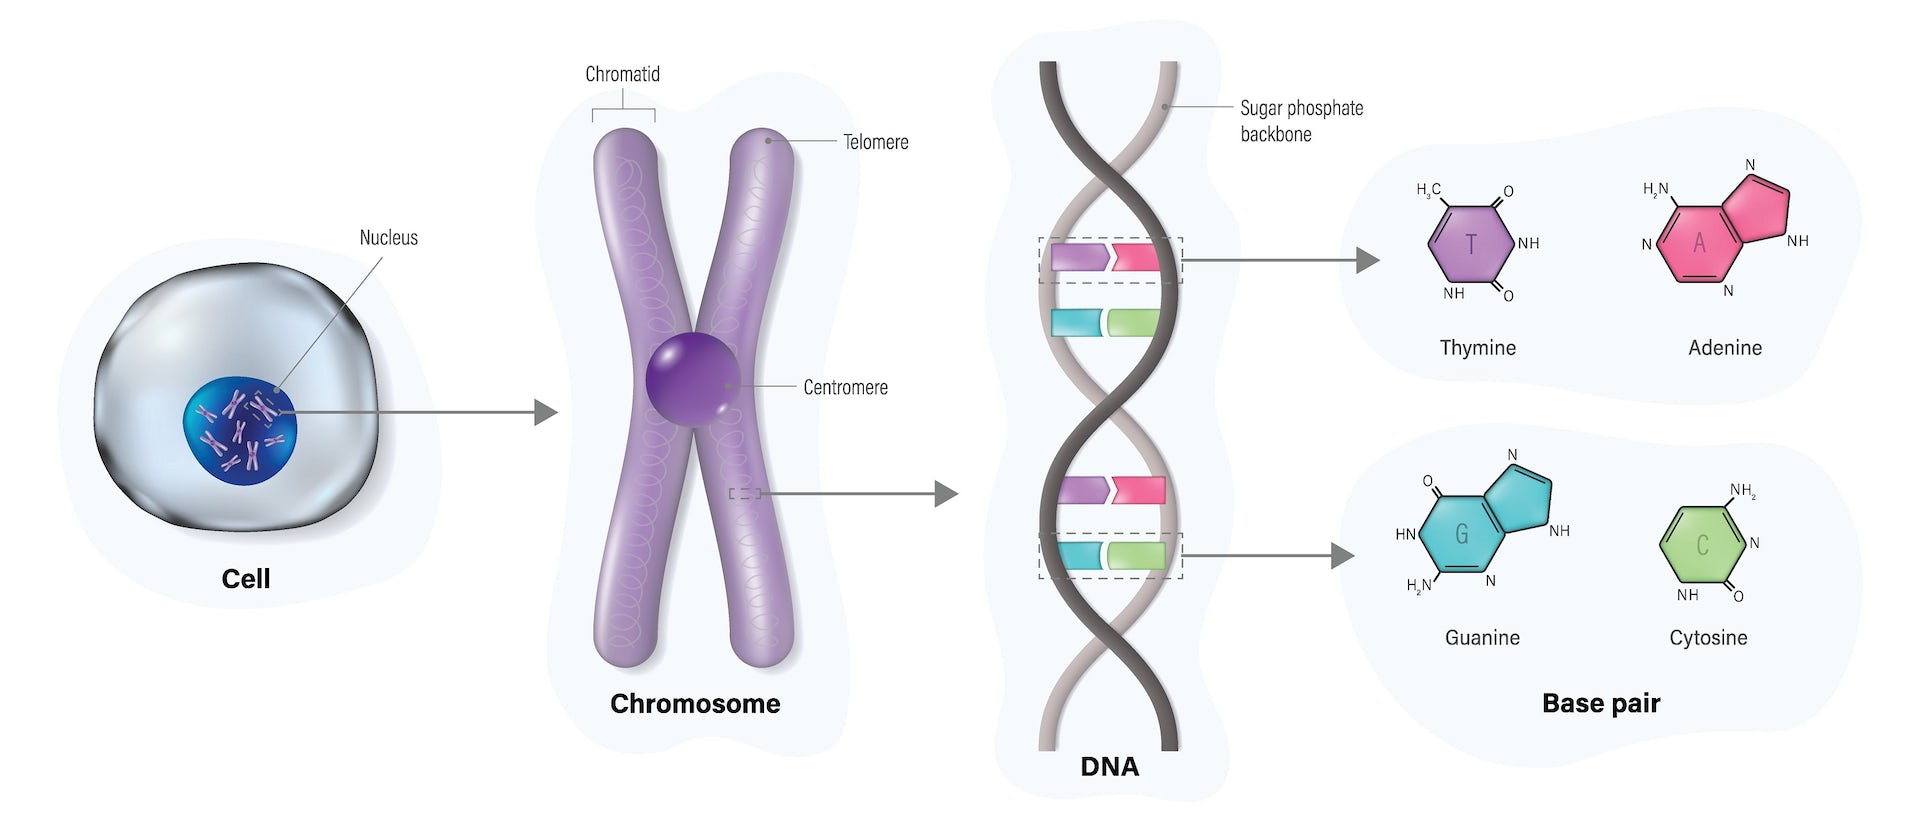  CHM13,  cromosoma y,  T2T,  genoma umano,  genoma cos'è,  genoma umano cos'è,  genoma umano lunghezza,  genoma umano quanti geni,  genoma umano cromosomi,  cromosomi umani,  cromosomi sessuali,  cromosomi x y,  cromosomi uomo,  cromosomi maschili,  cromosomi sessuali xy,  cromosomi sessuali maschili,  cromosomi sessuali dove sono,  cromosomi sessuali uomo,  cromosoma y maschio,  cromosoma fertilità maschile,  cromosomi e fertilita,  genetica scoperta,  genoma scoperta,  sequenza genetica genoma